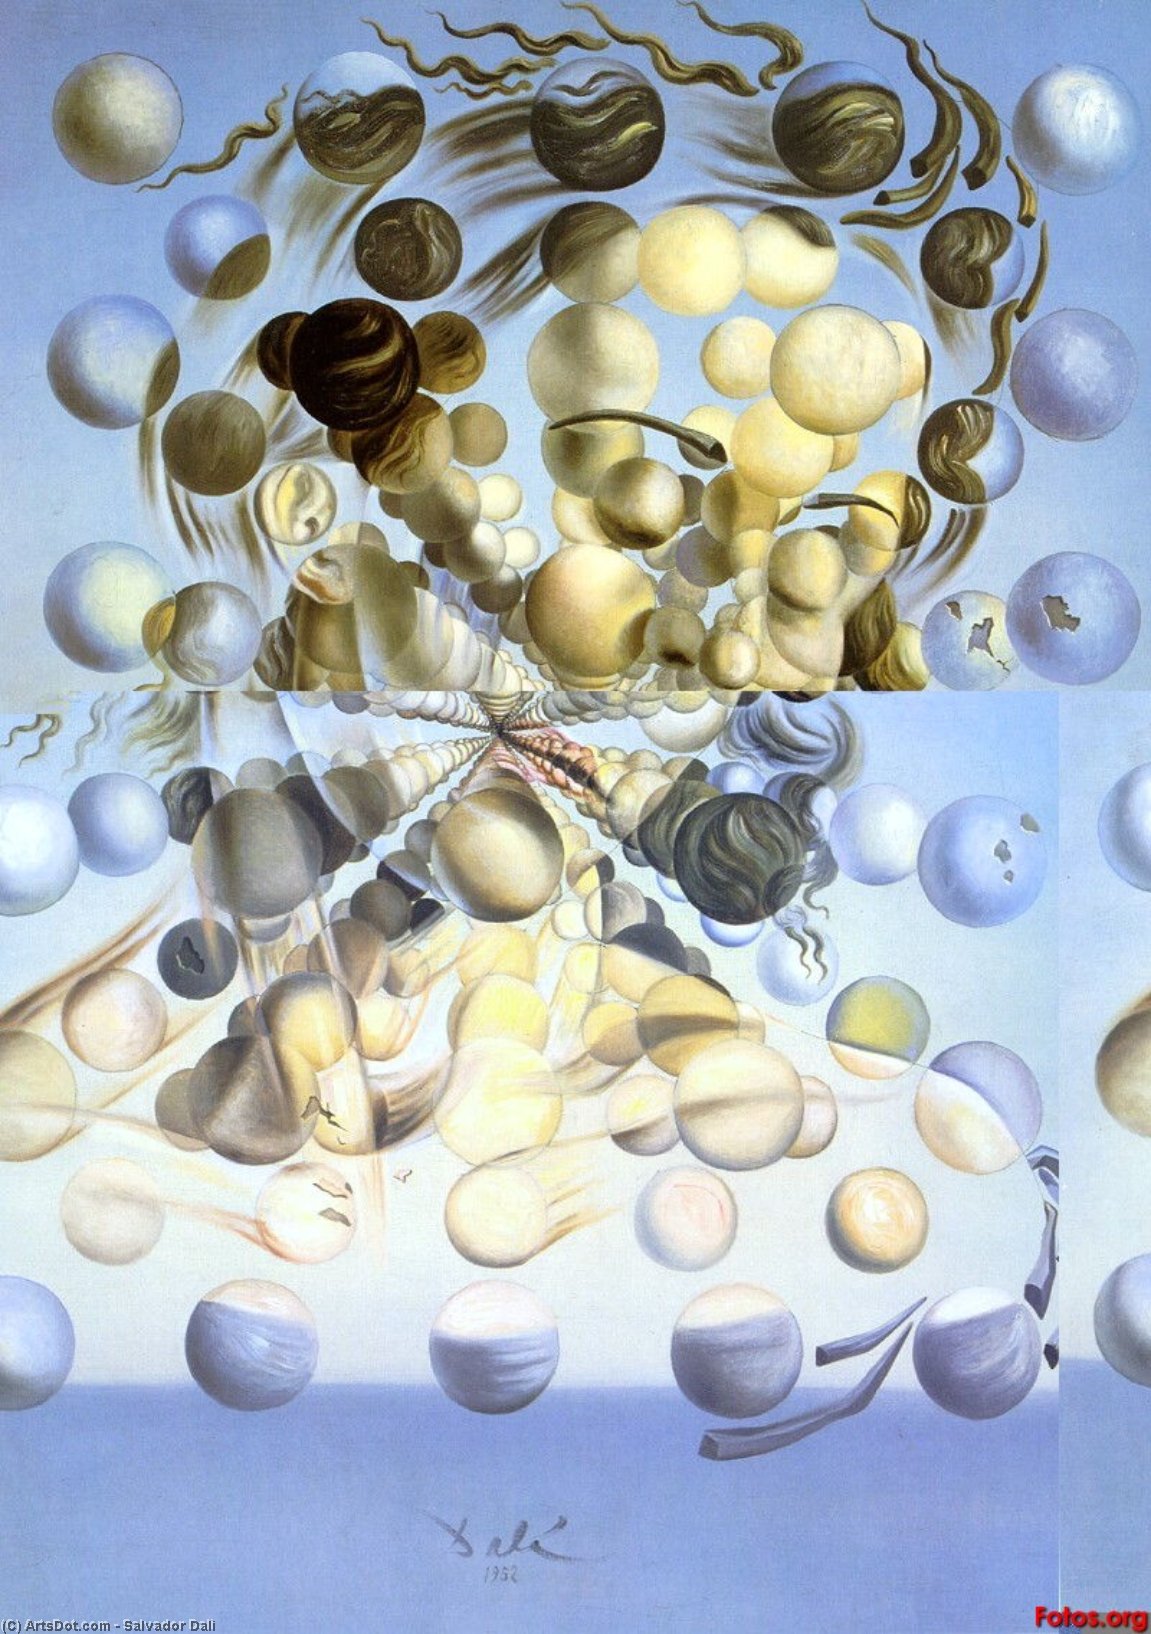 WikiOO.org - Encyclopedia of Fine Arts - Malba, Artwork Salvador Dali - Galatea of the Spheres